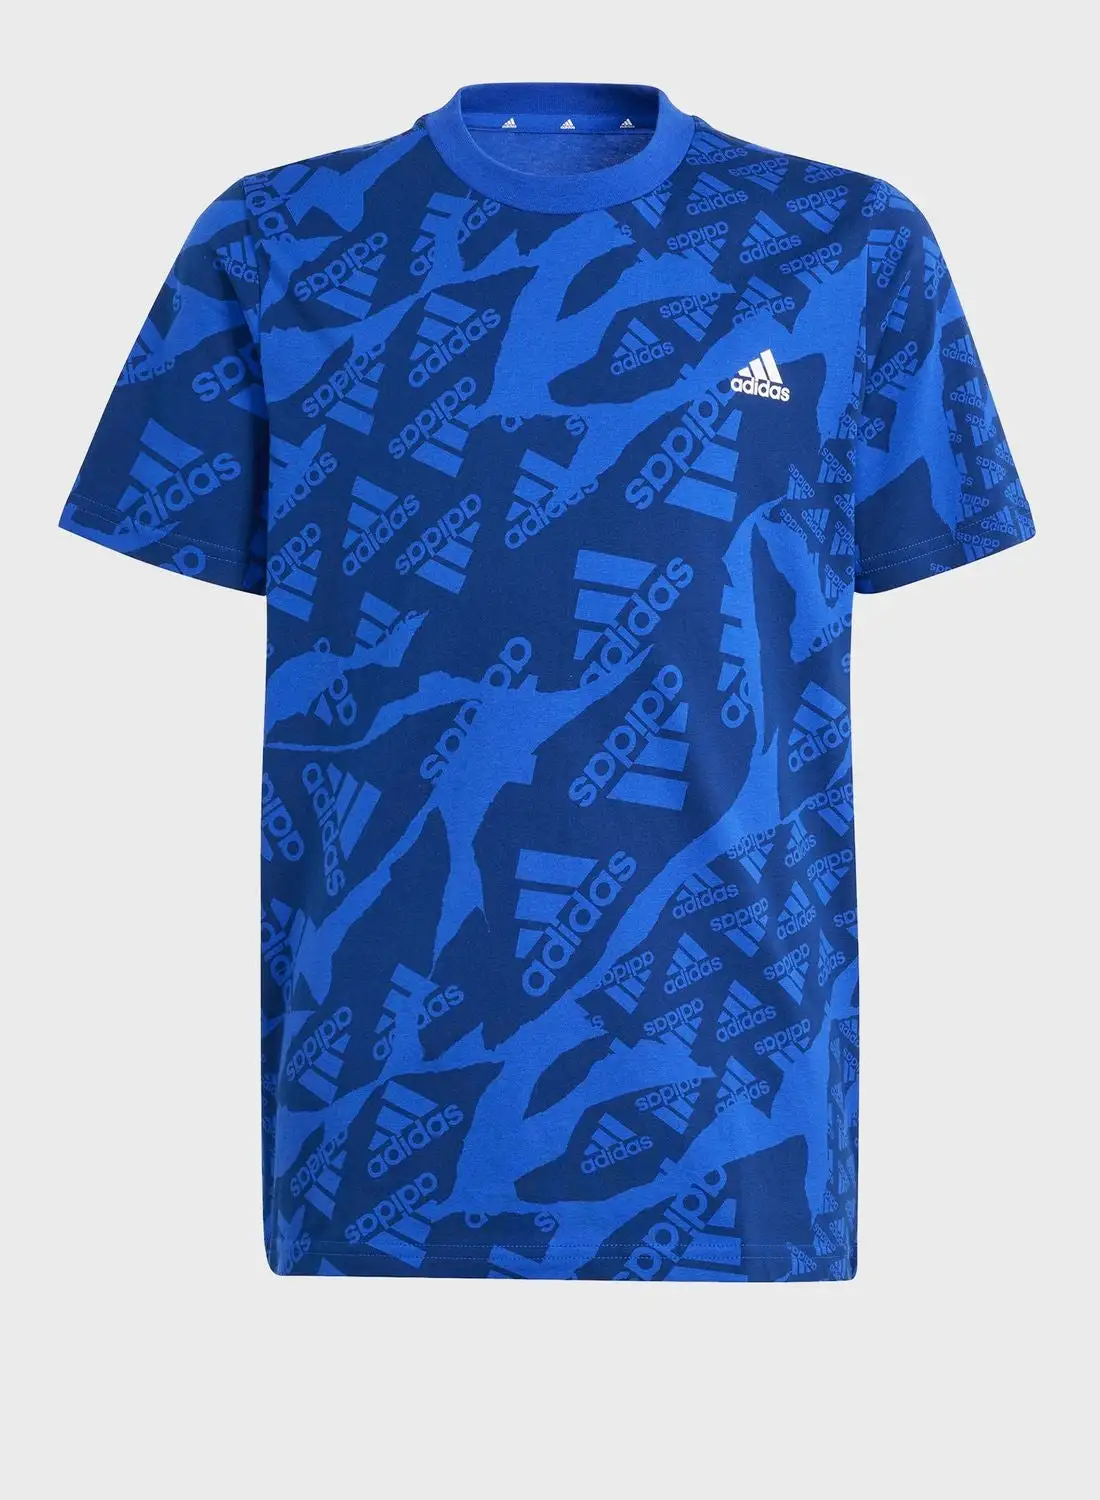 Adidas Junior Camlog T-Shirt